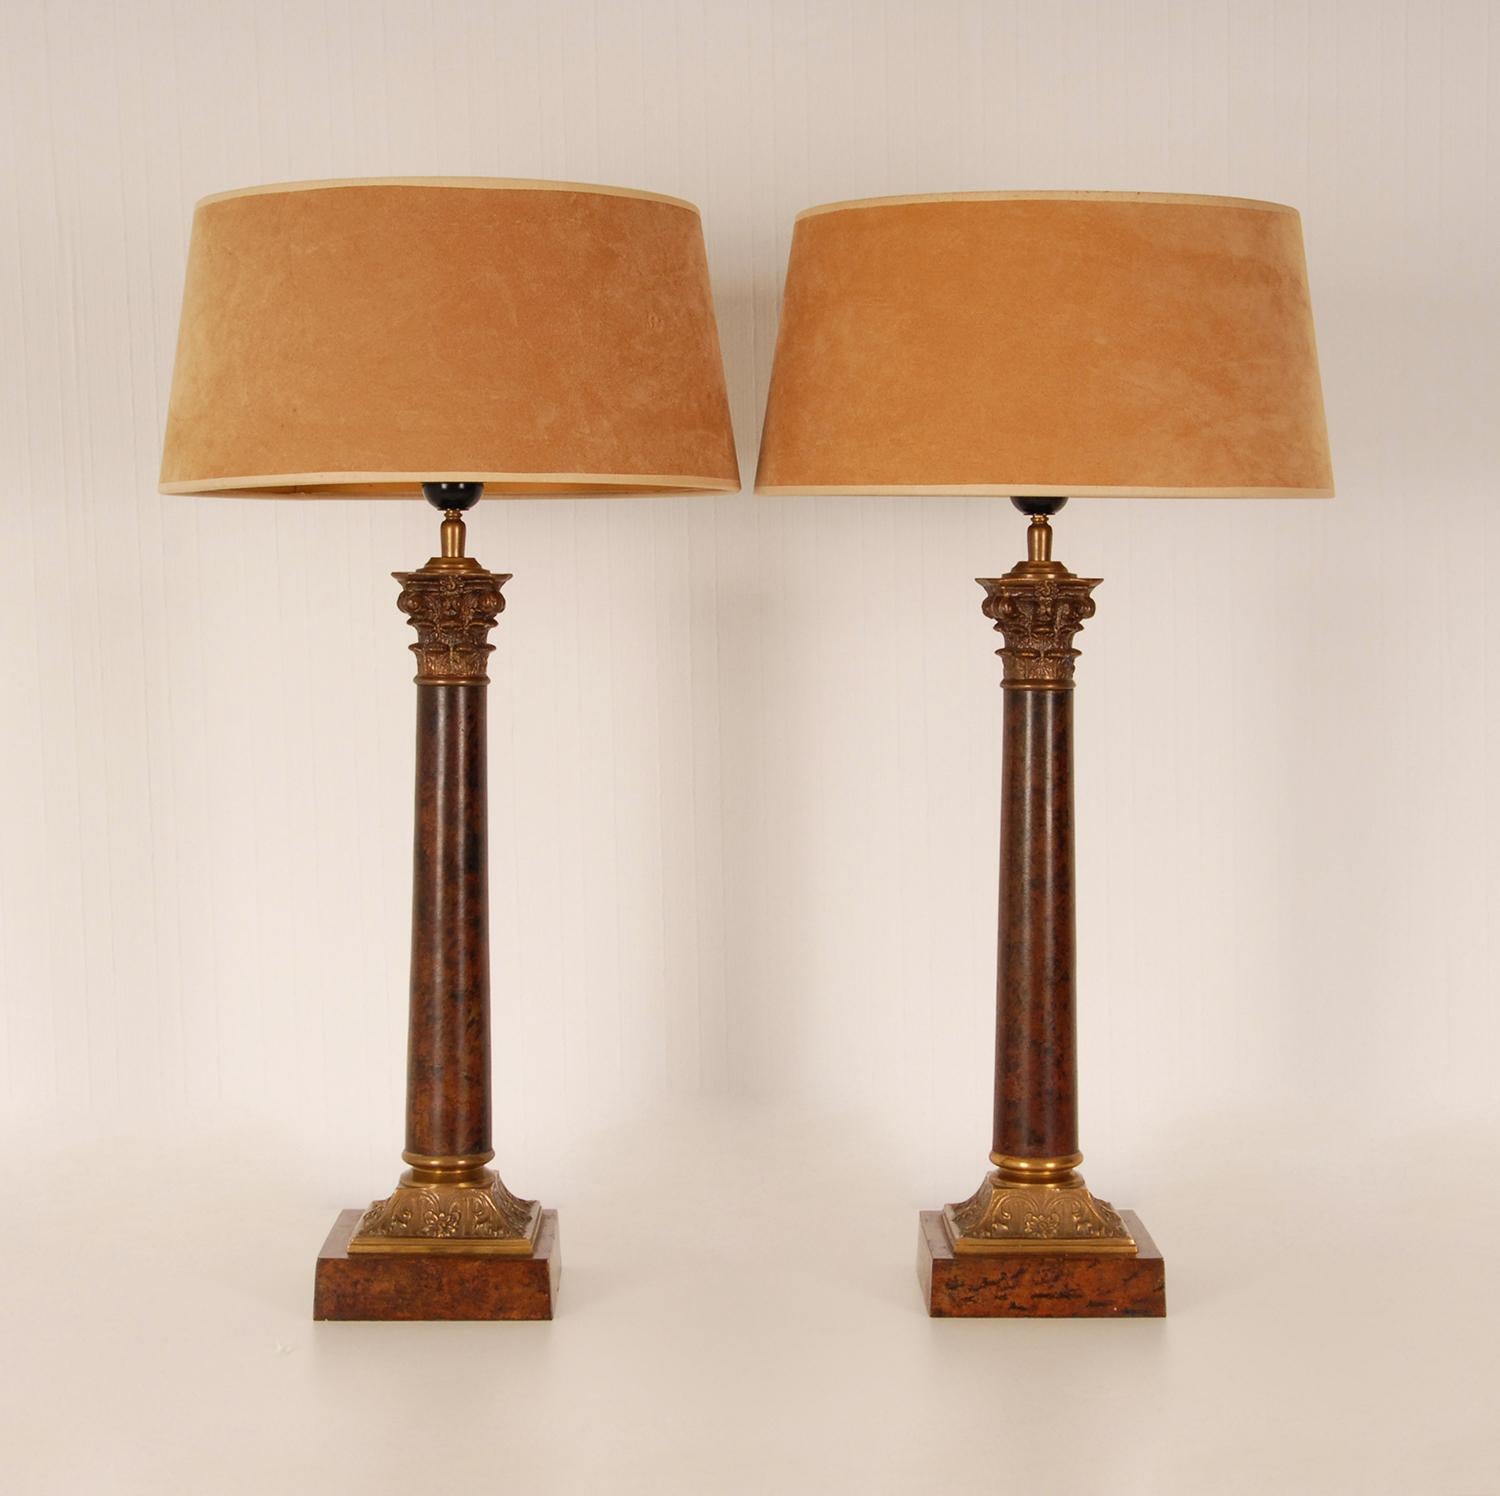 French Empire Table Lamps Gilt Bronze Corinthian Column E.F. Caldwell Vintage - a Pair